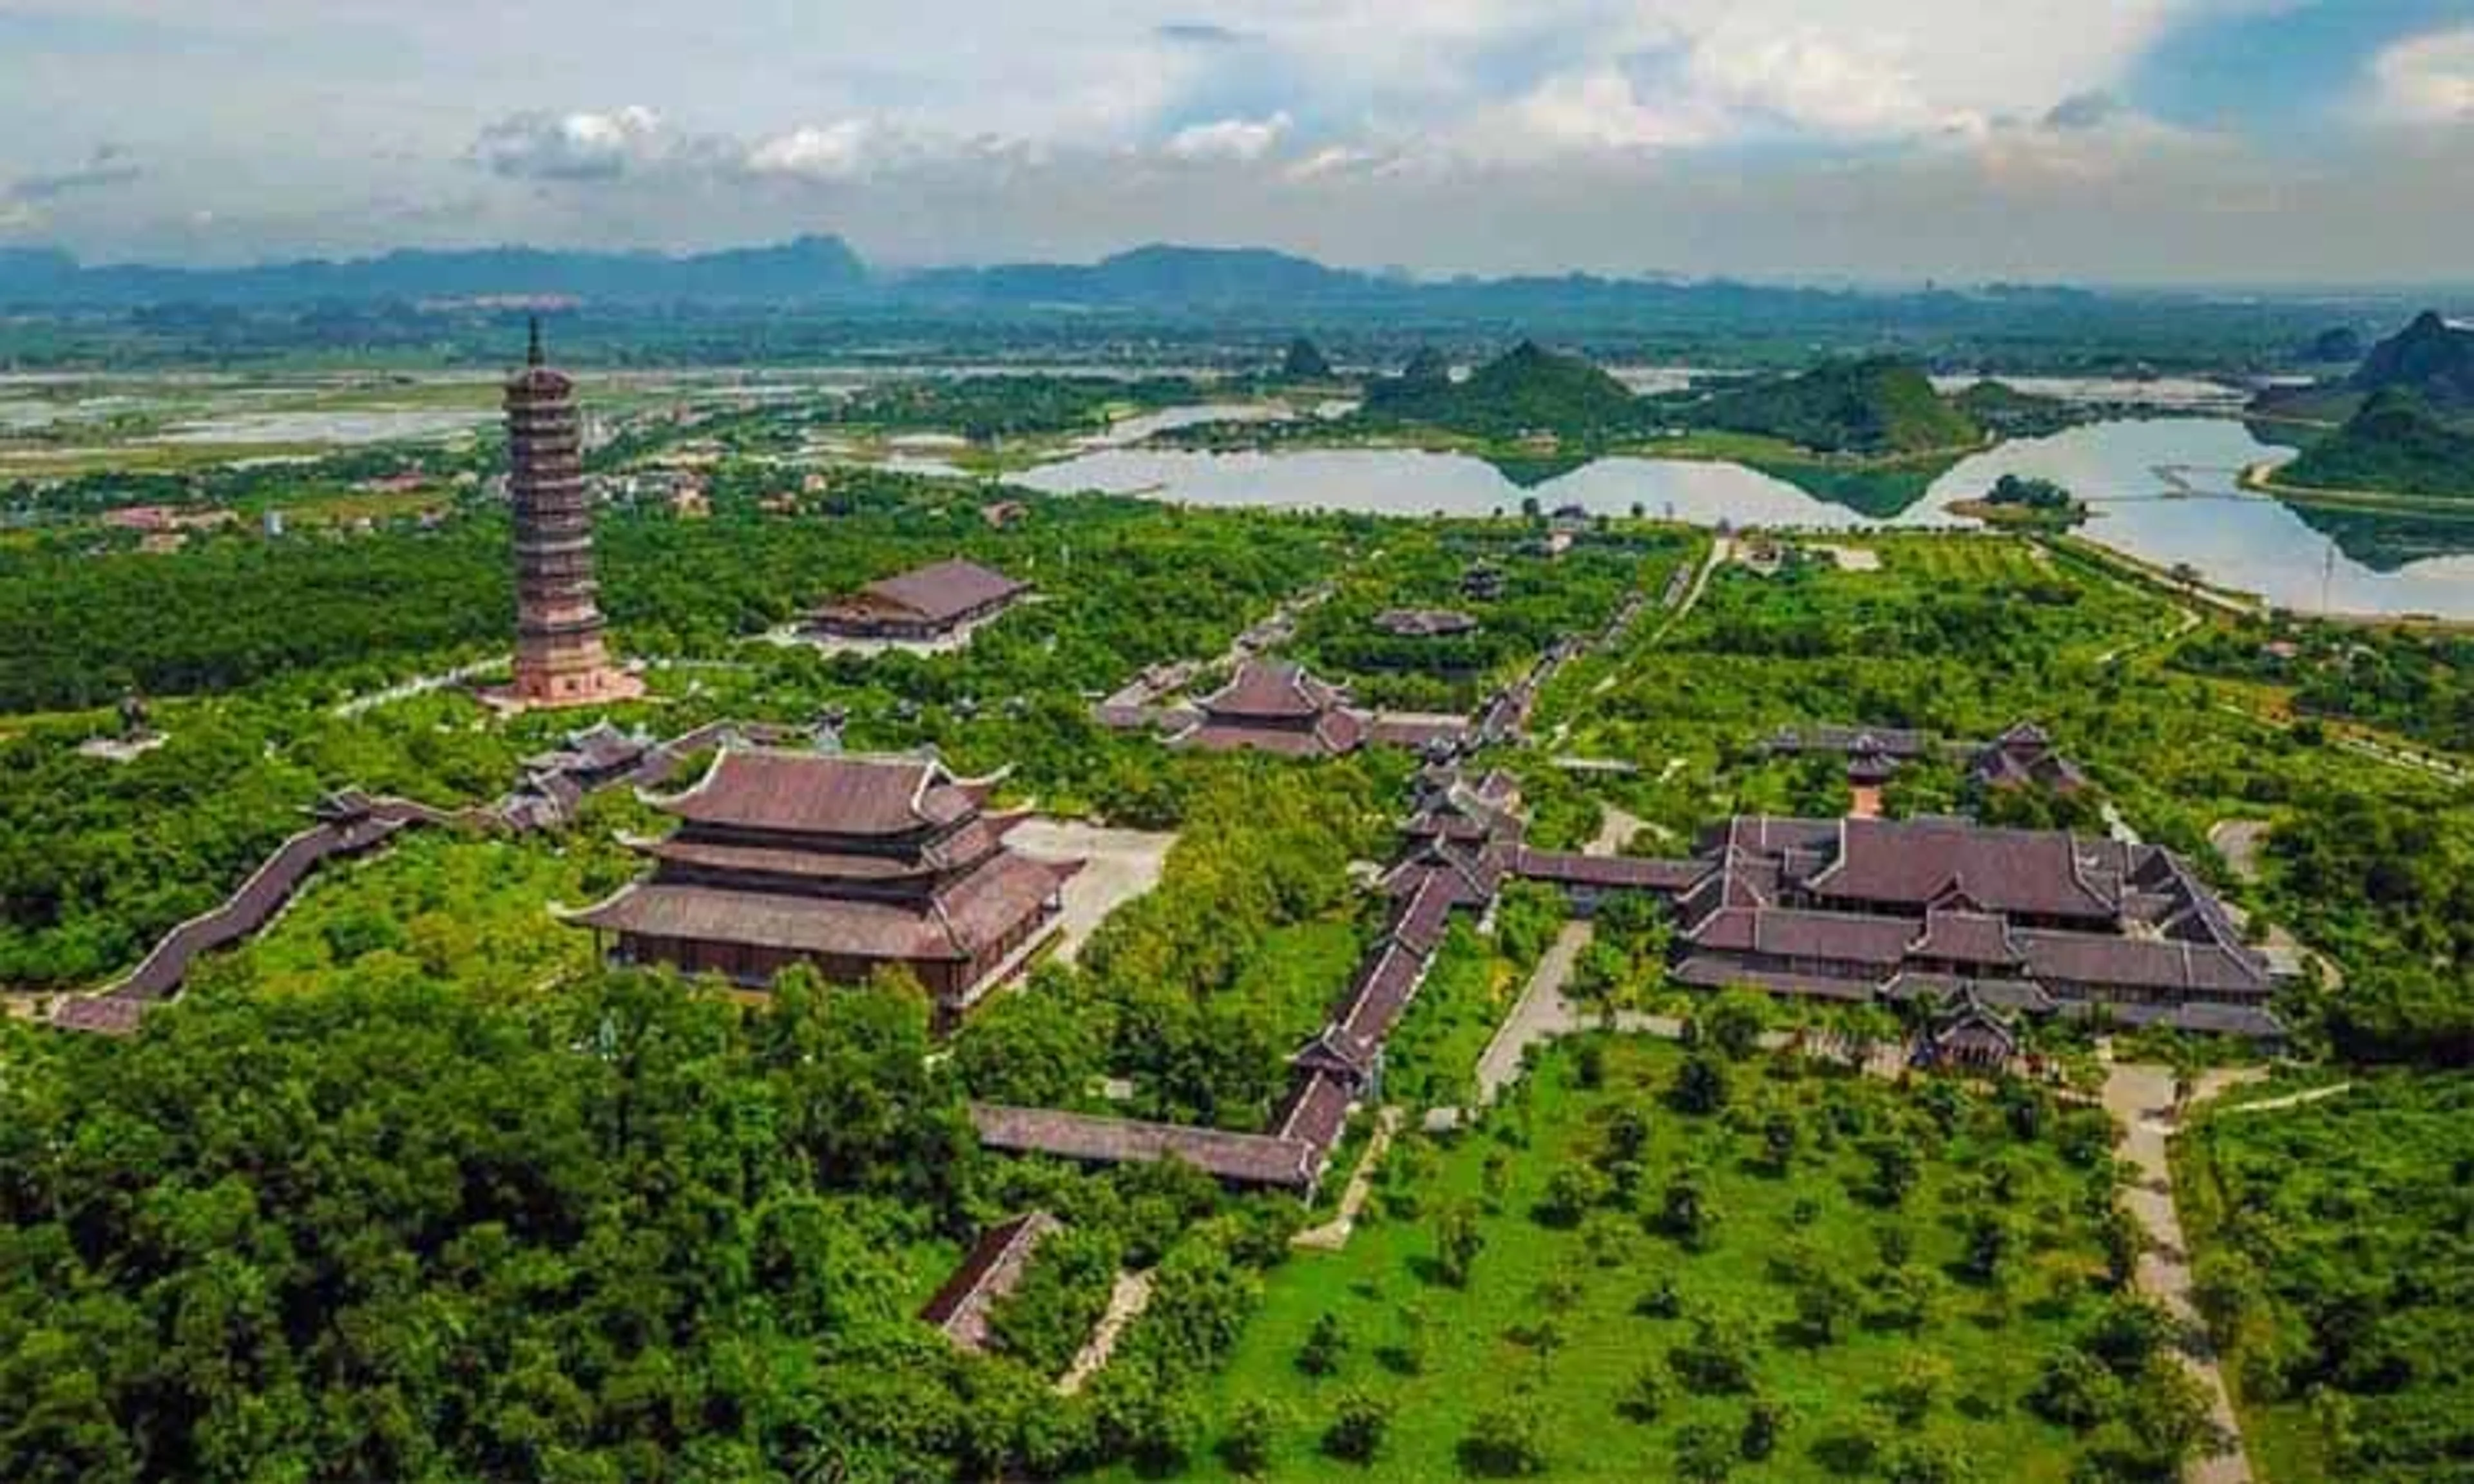 Spring trip to explore Bai Dinh Pagoda in Vietnam